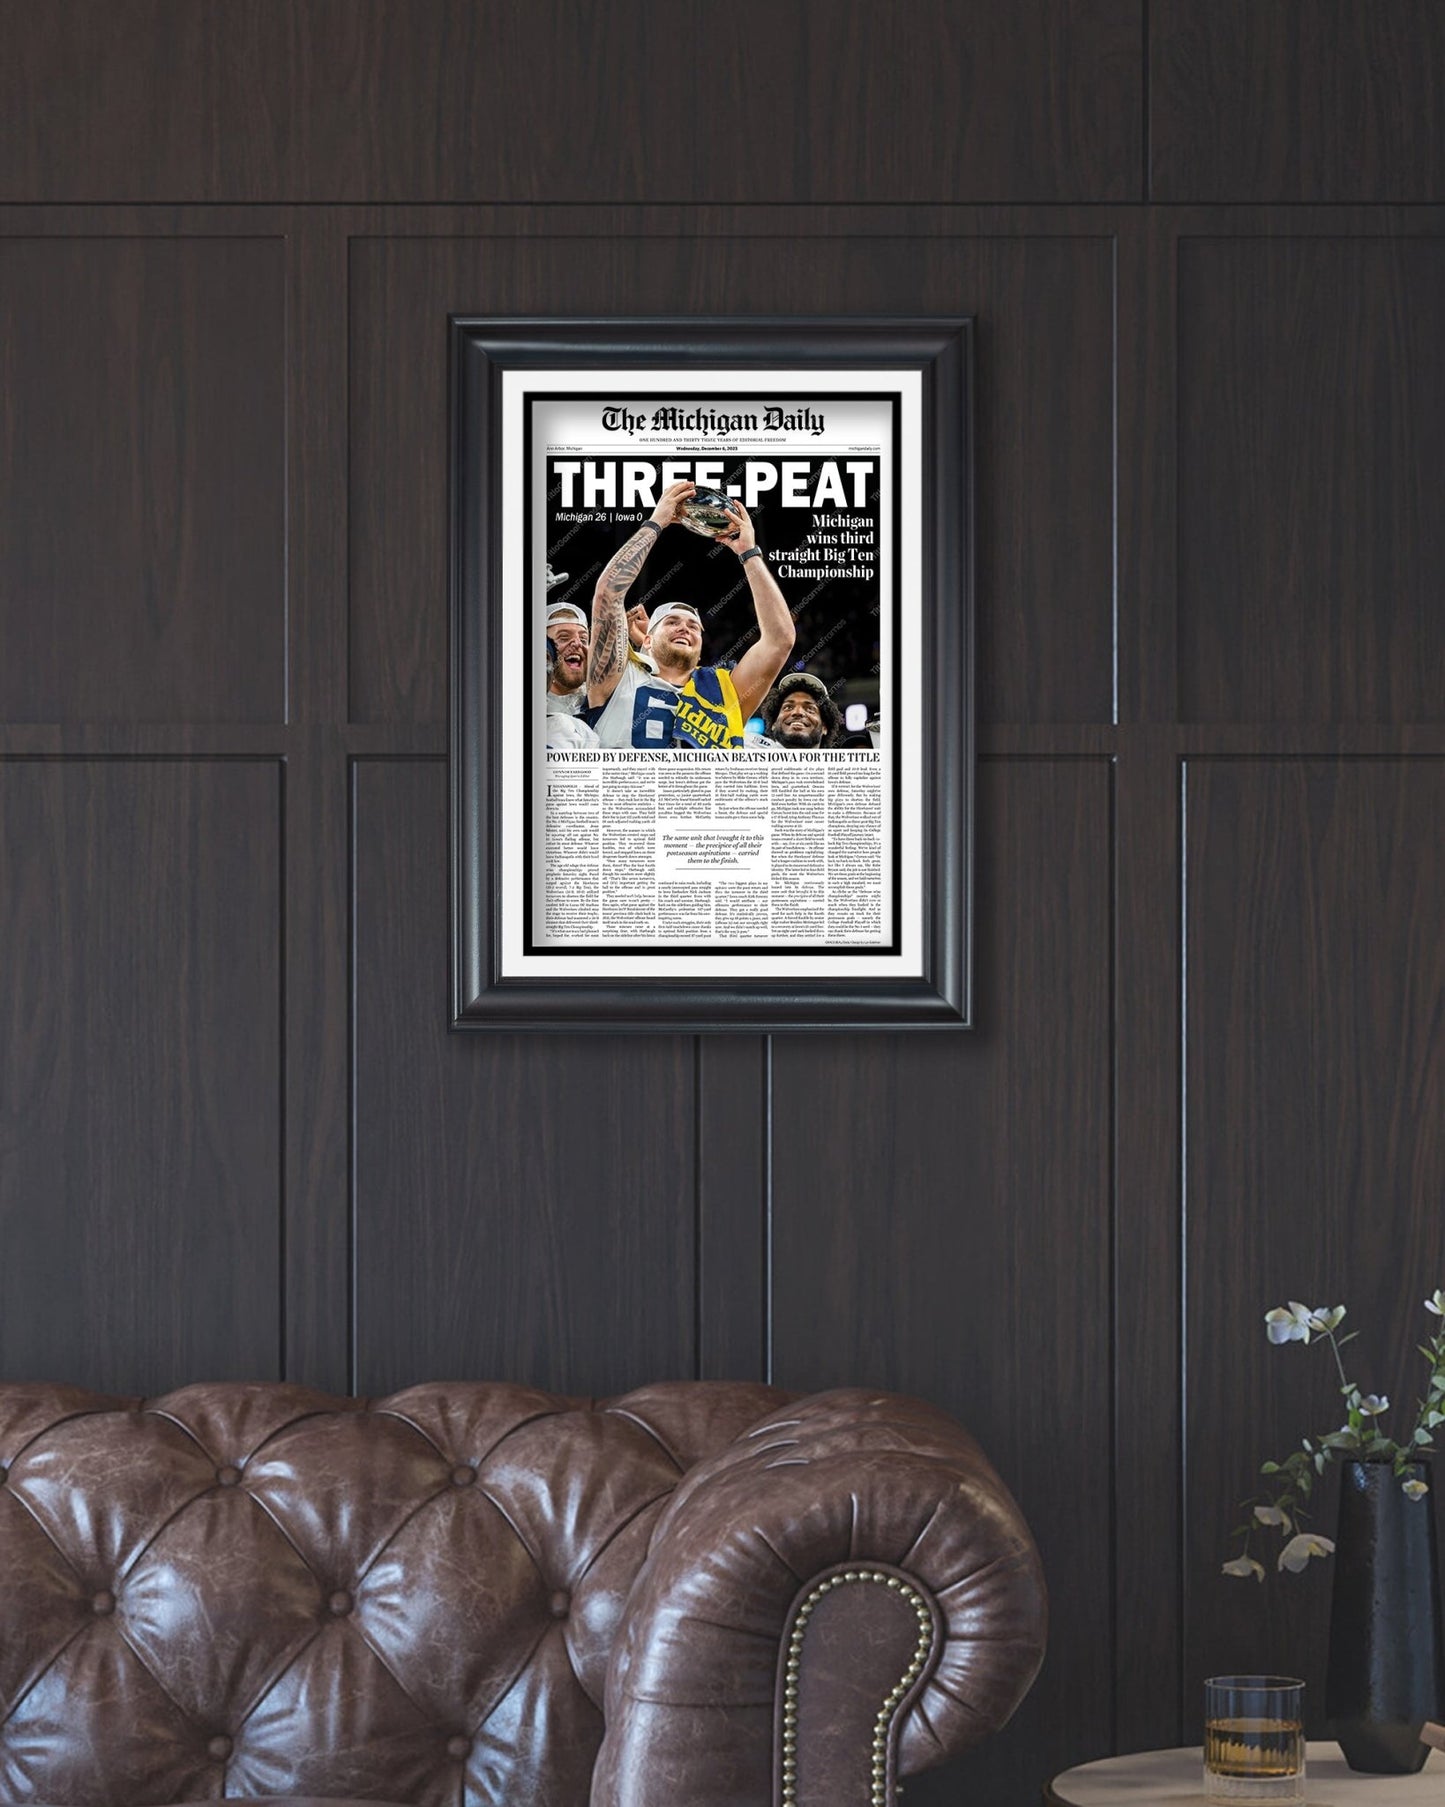 2023 Michigan Wolverines Big Ten Championship: 'THREE-PEAT' - Framed Newspaper Print - Title Game Frames